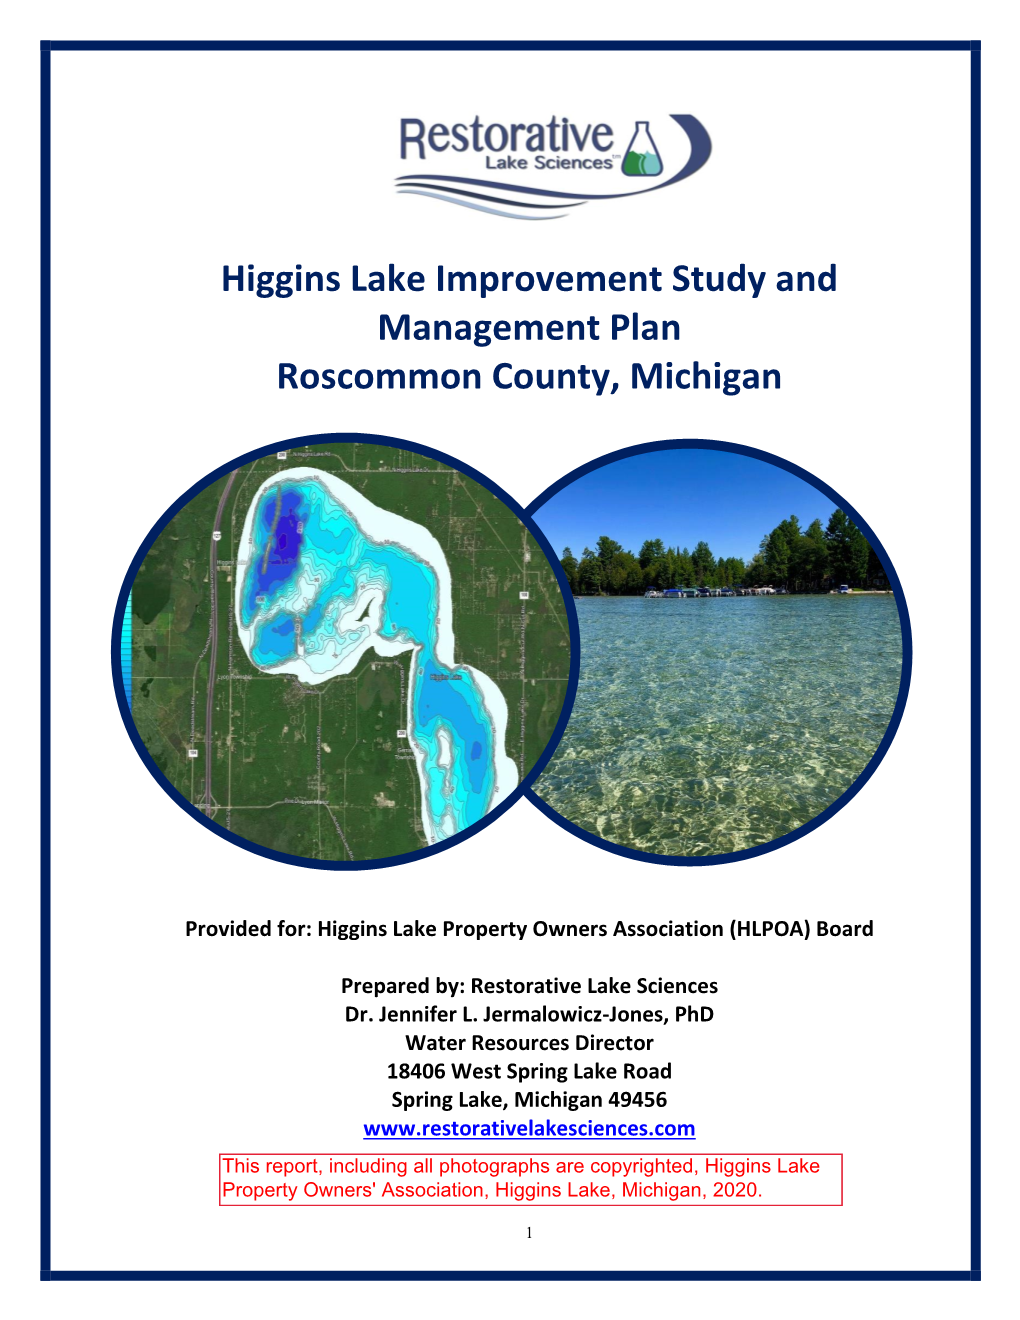 Higgins Lake Improvement Study and Management Plan Roscommon County, Michigan